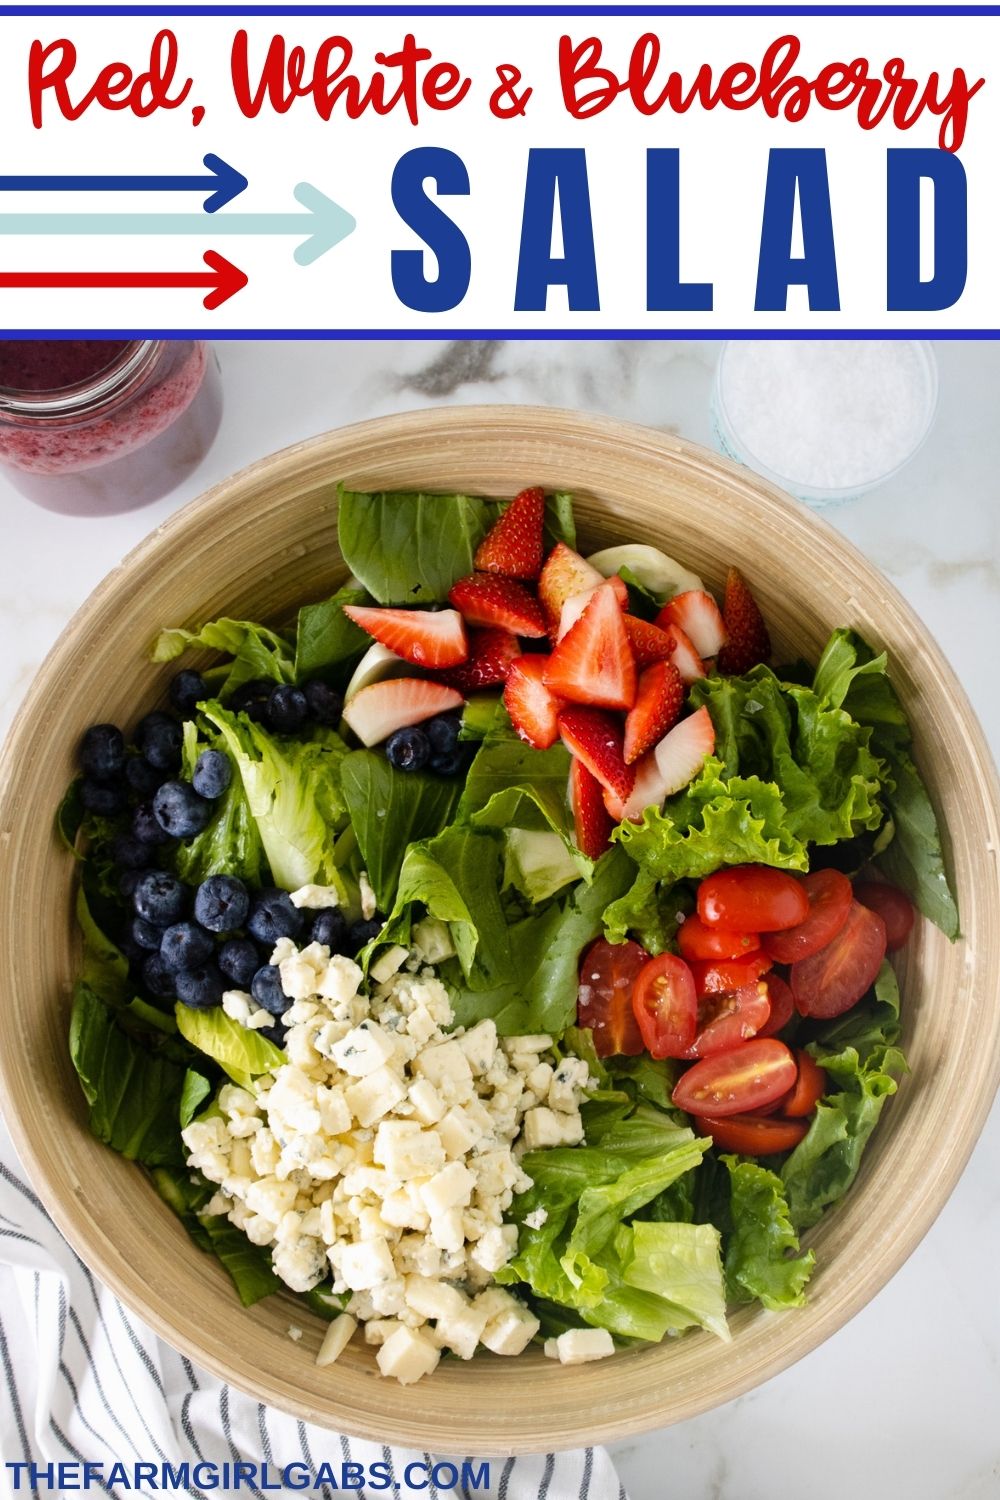 Red, White & Blueberry Salad - The Farm Girl Gabs®